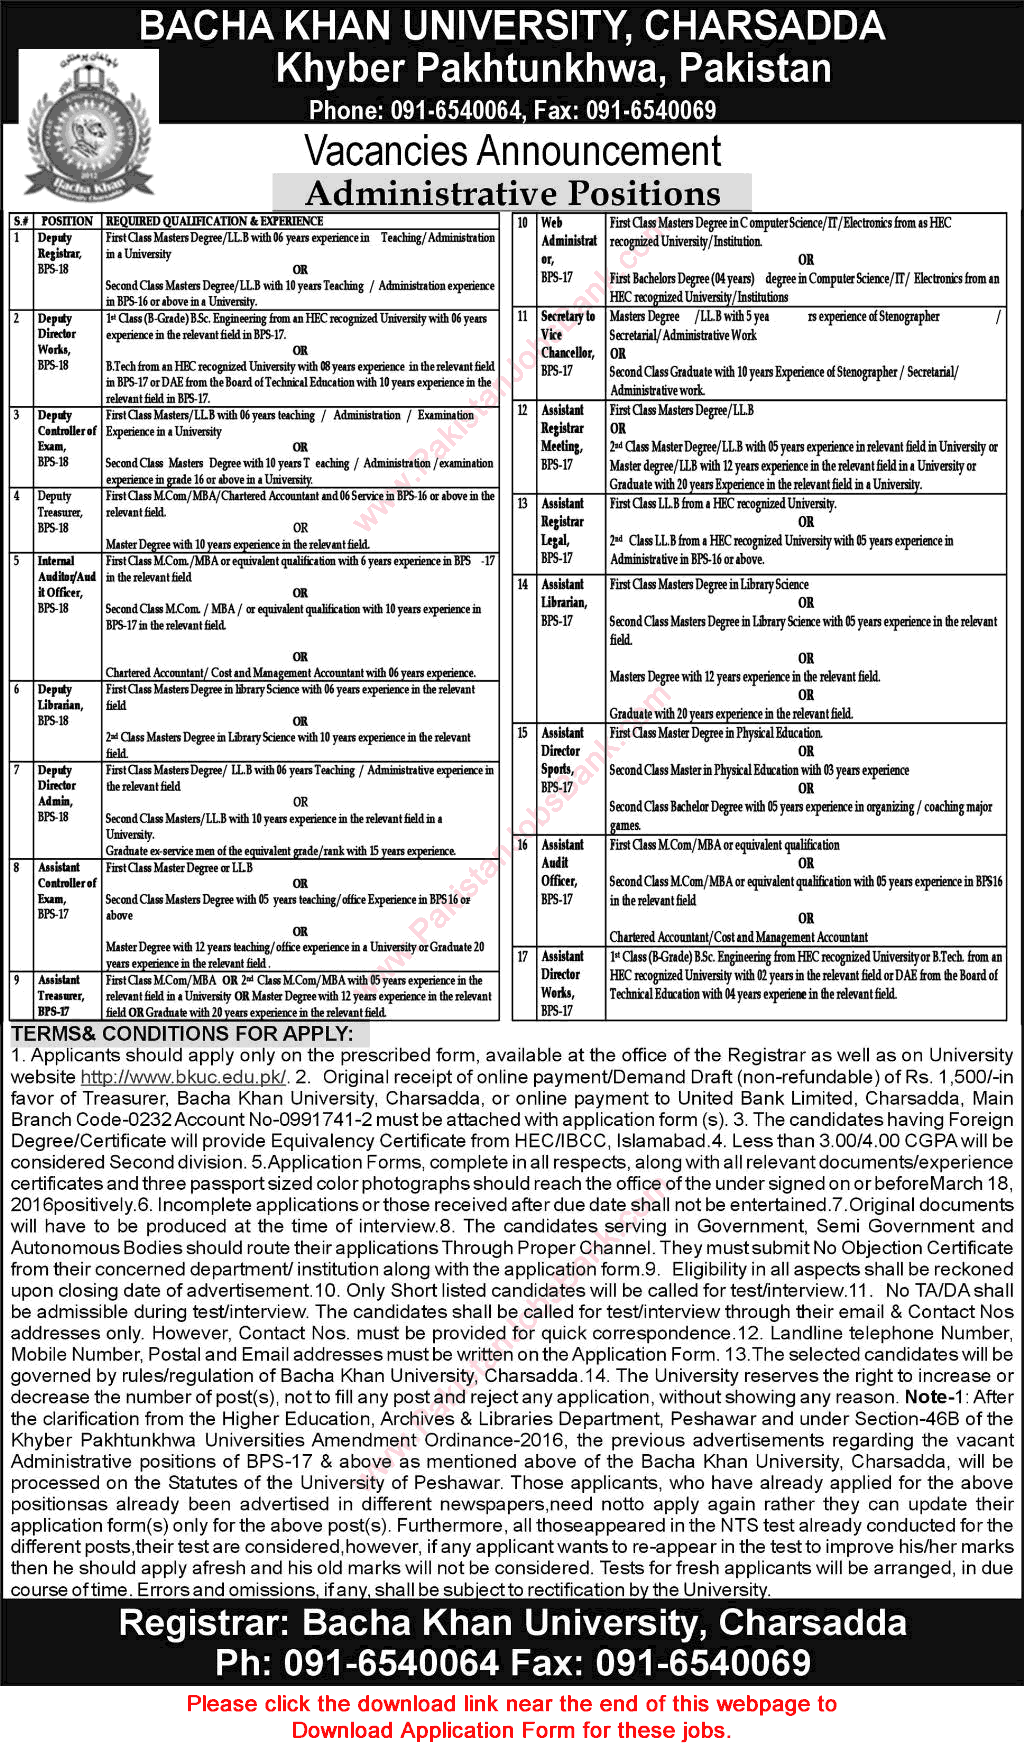 Bacha Khan University Charsadda Jobs 2016 February / March Application Form Download Latest